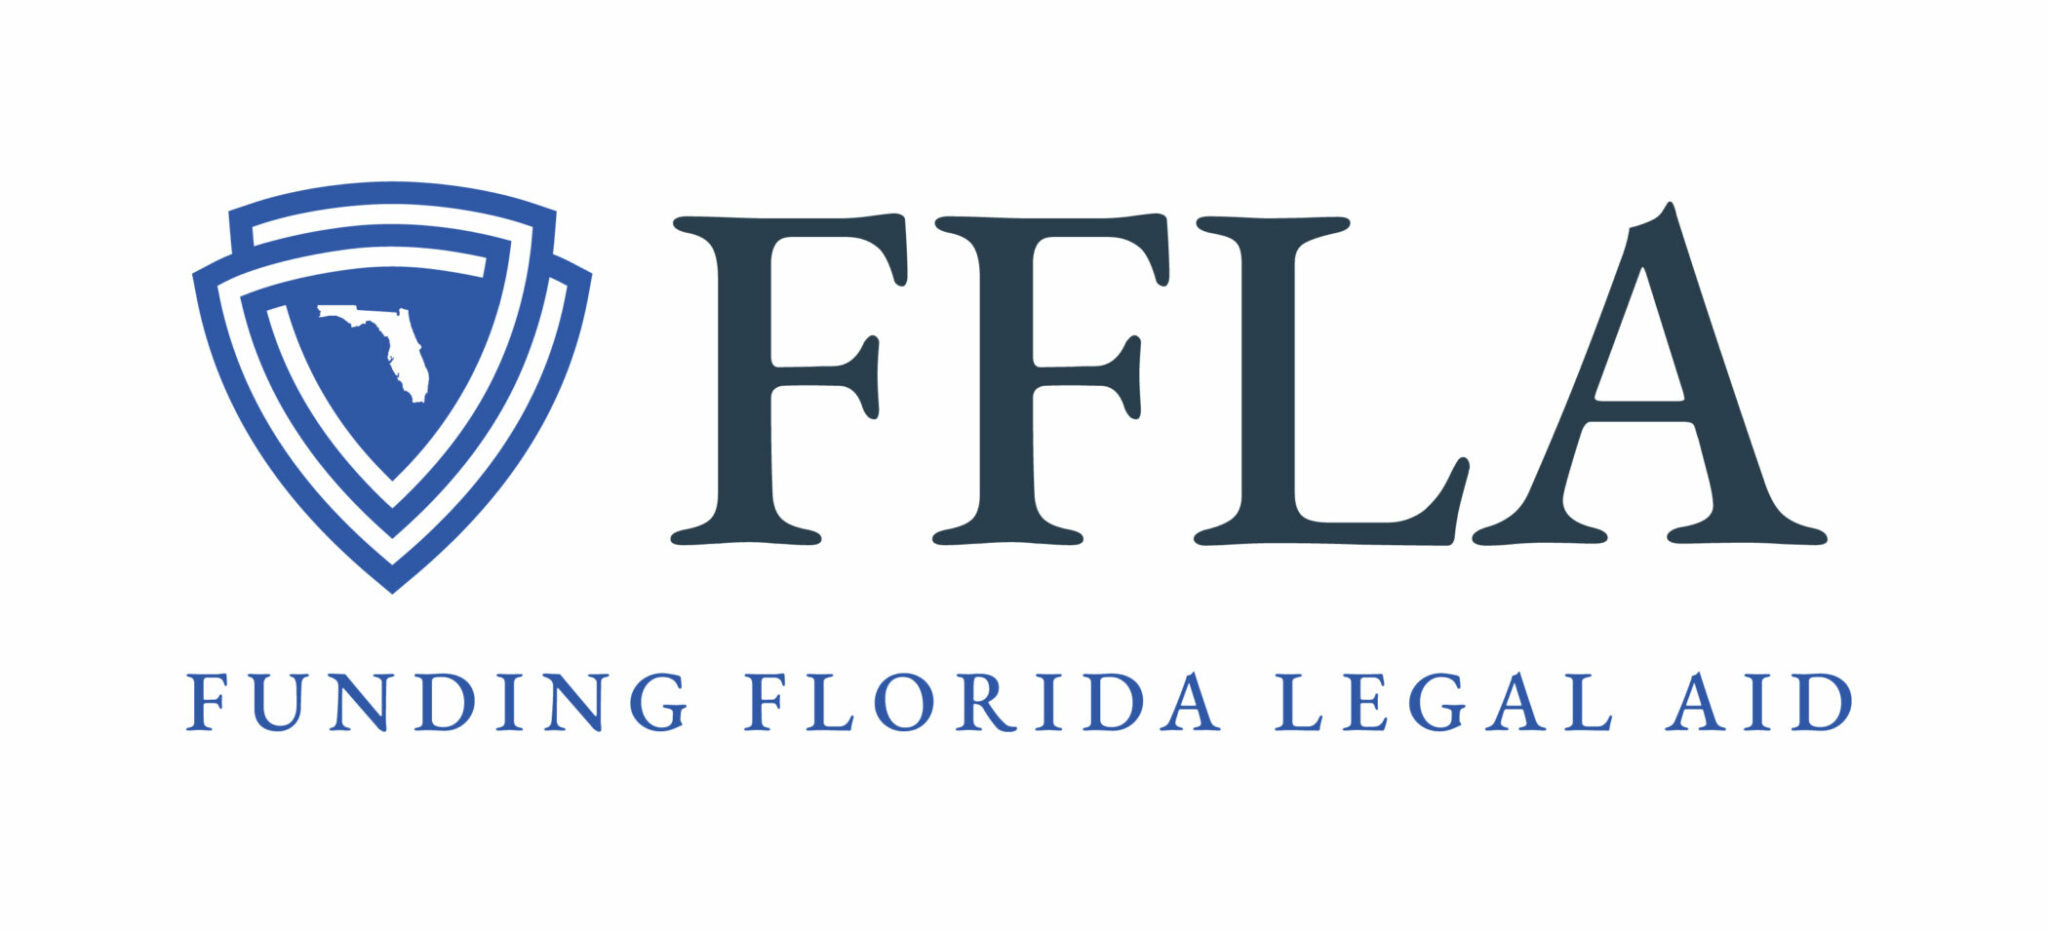 The Florida Bar Foundation